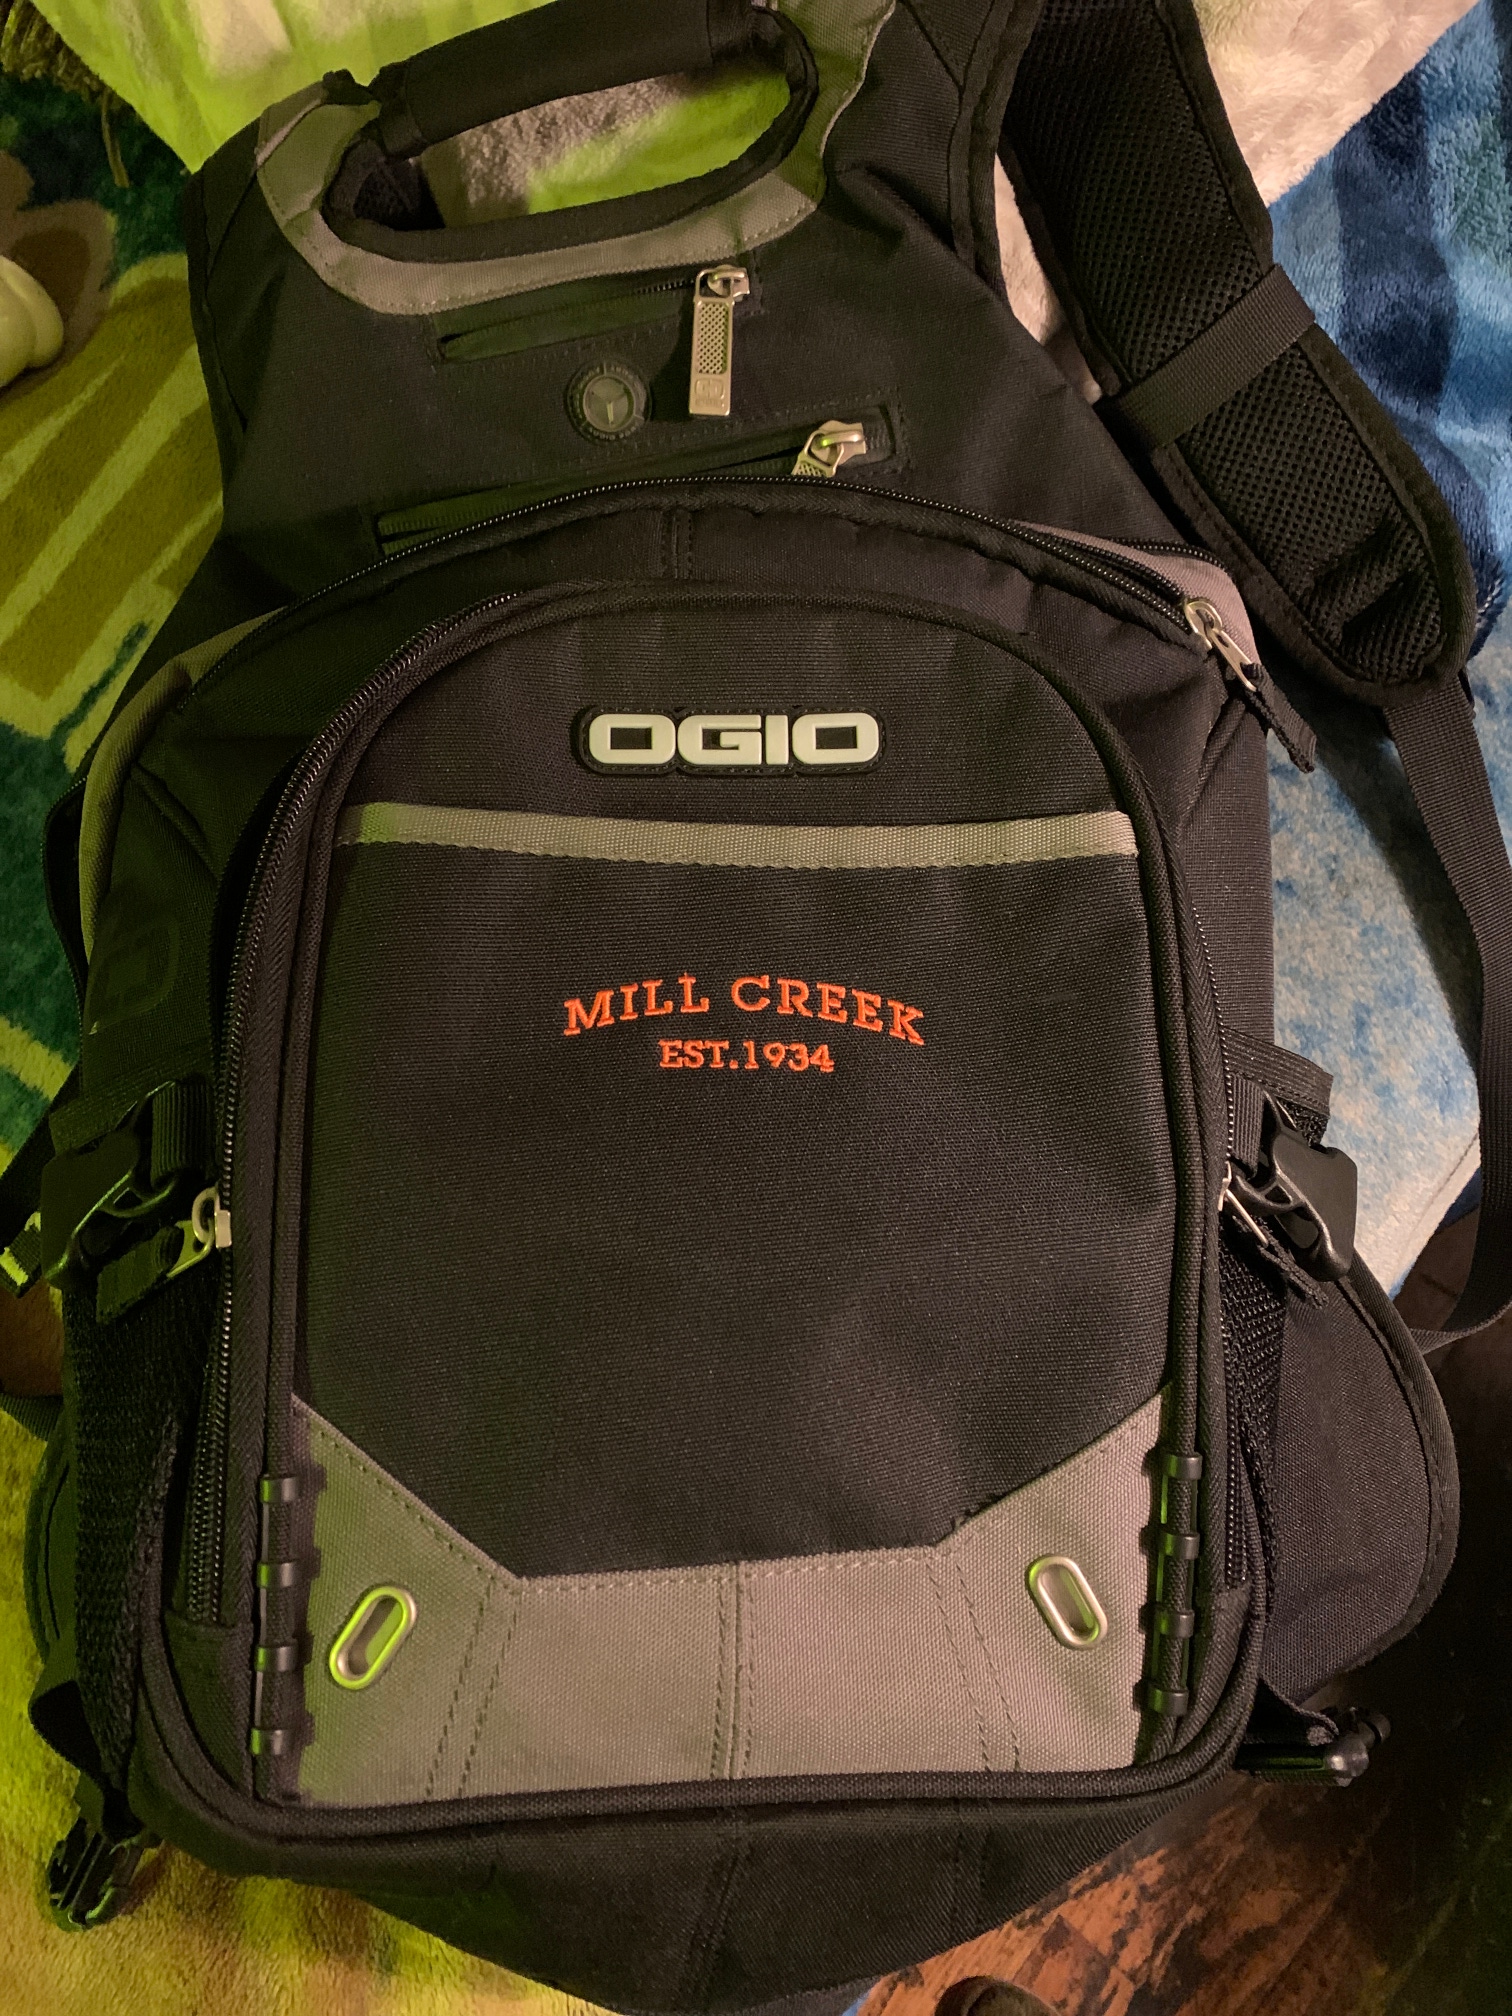 Used Adult Unisex Ogio Backpack